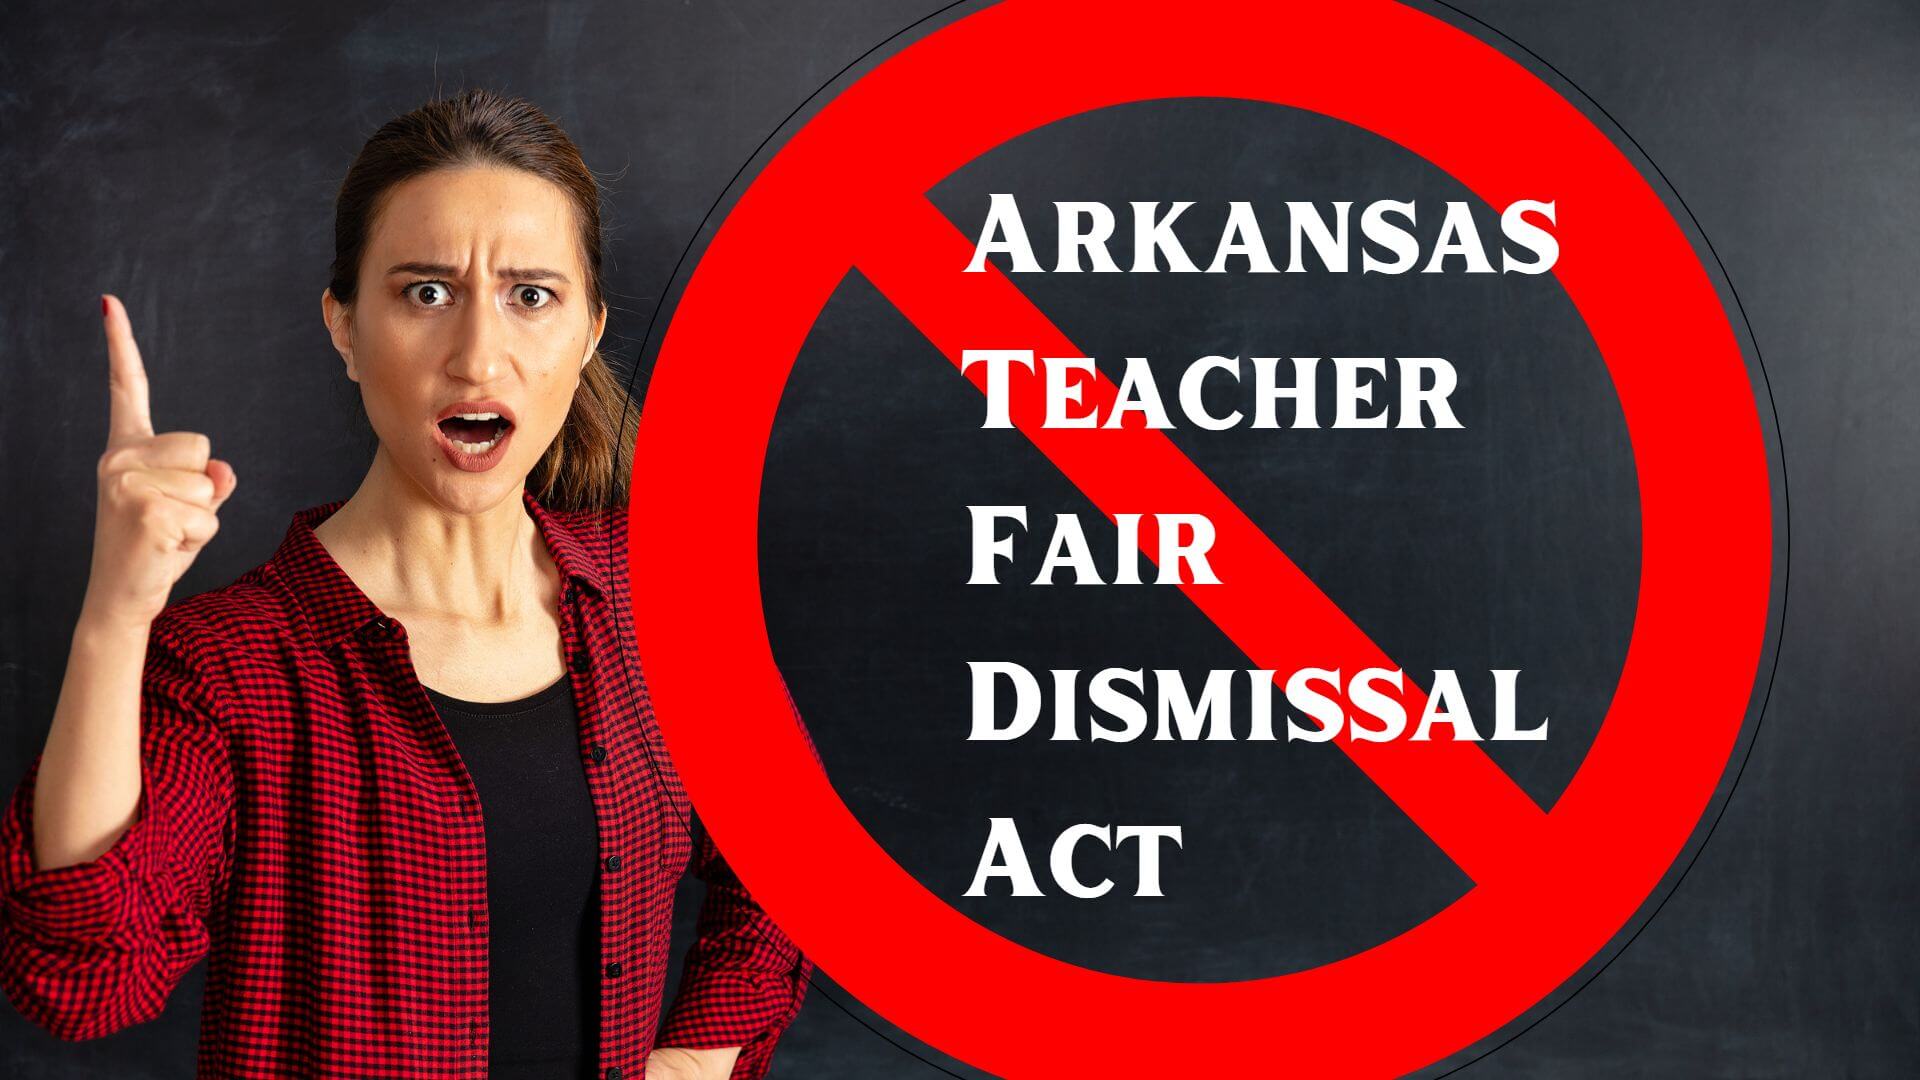 Arkansas Teacher Fair Dismissal Act Getting Repealed WH Law